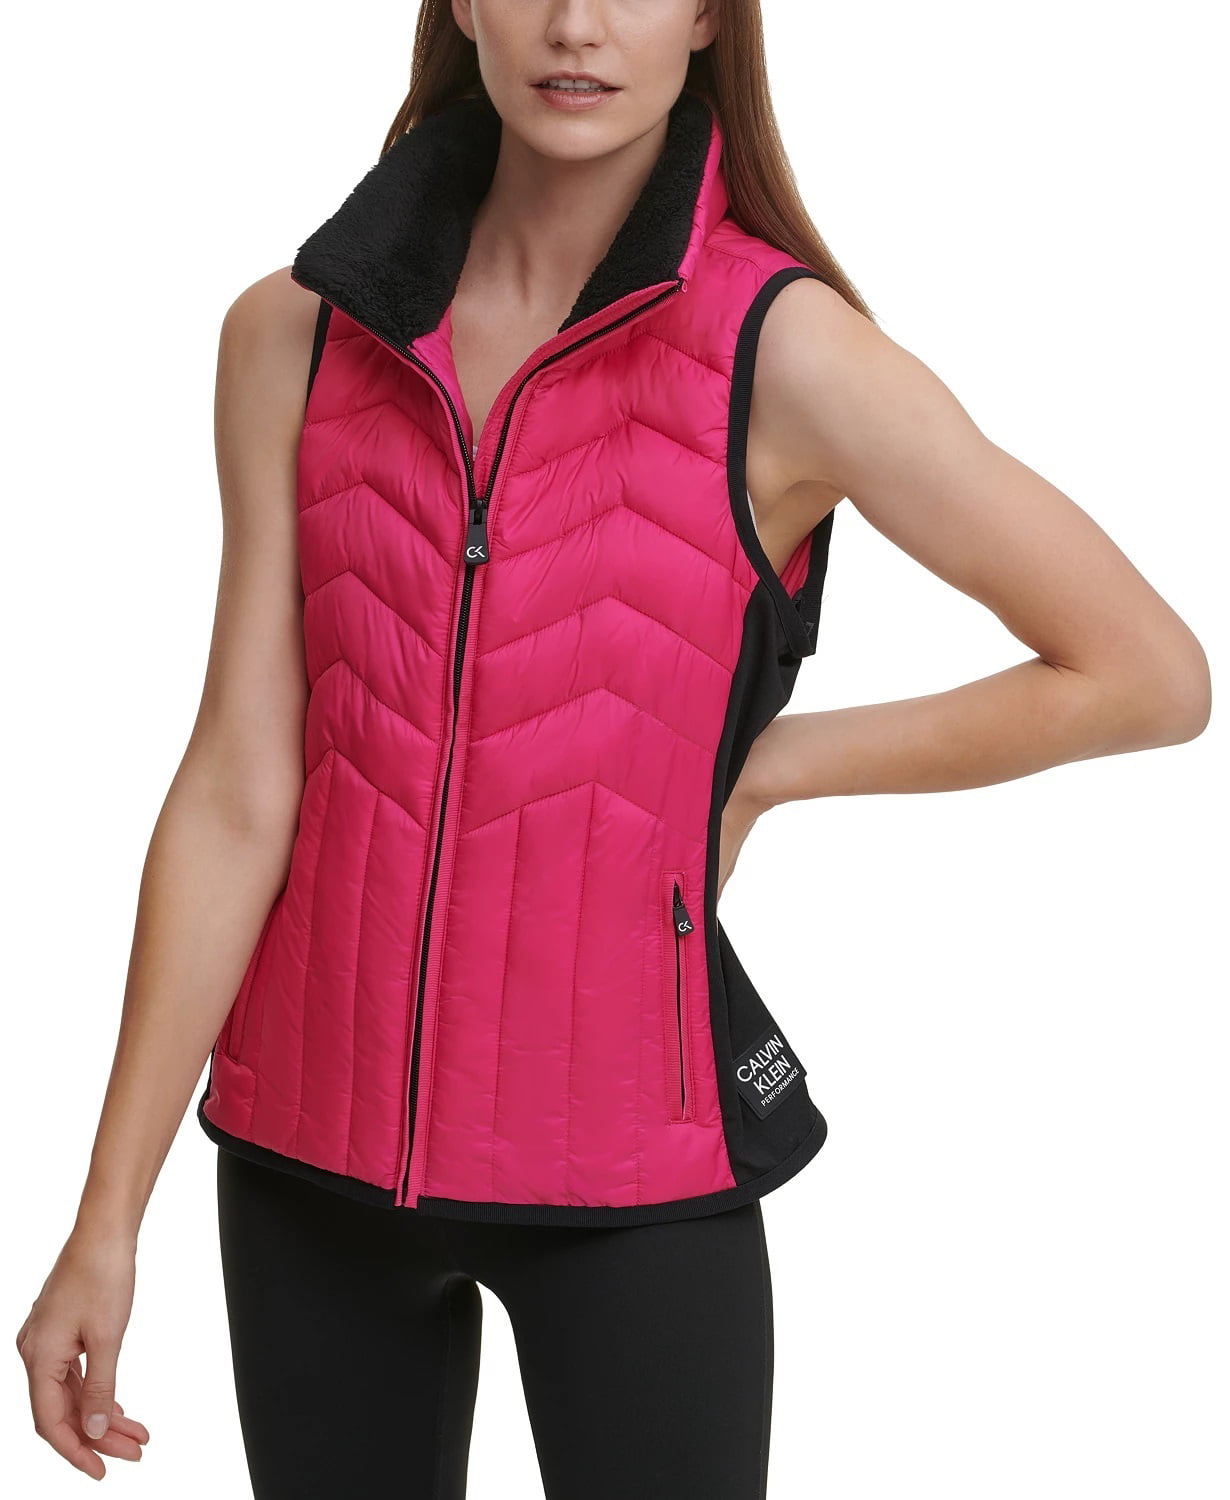 Calvin Klein Women's Performance Colorblocked Puffer Vest, Pink, XL -  